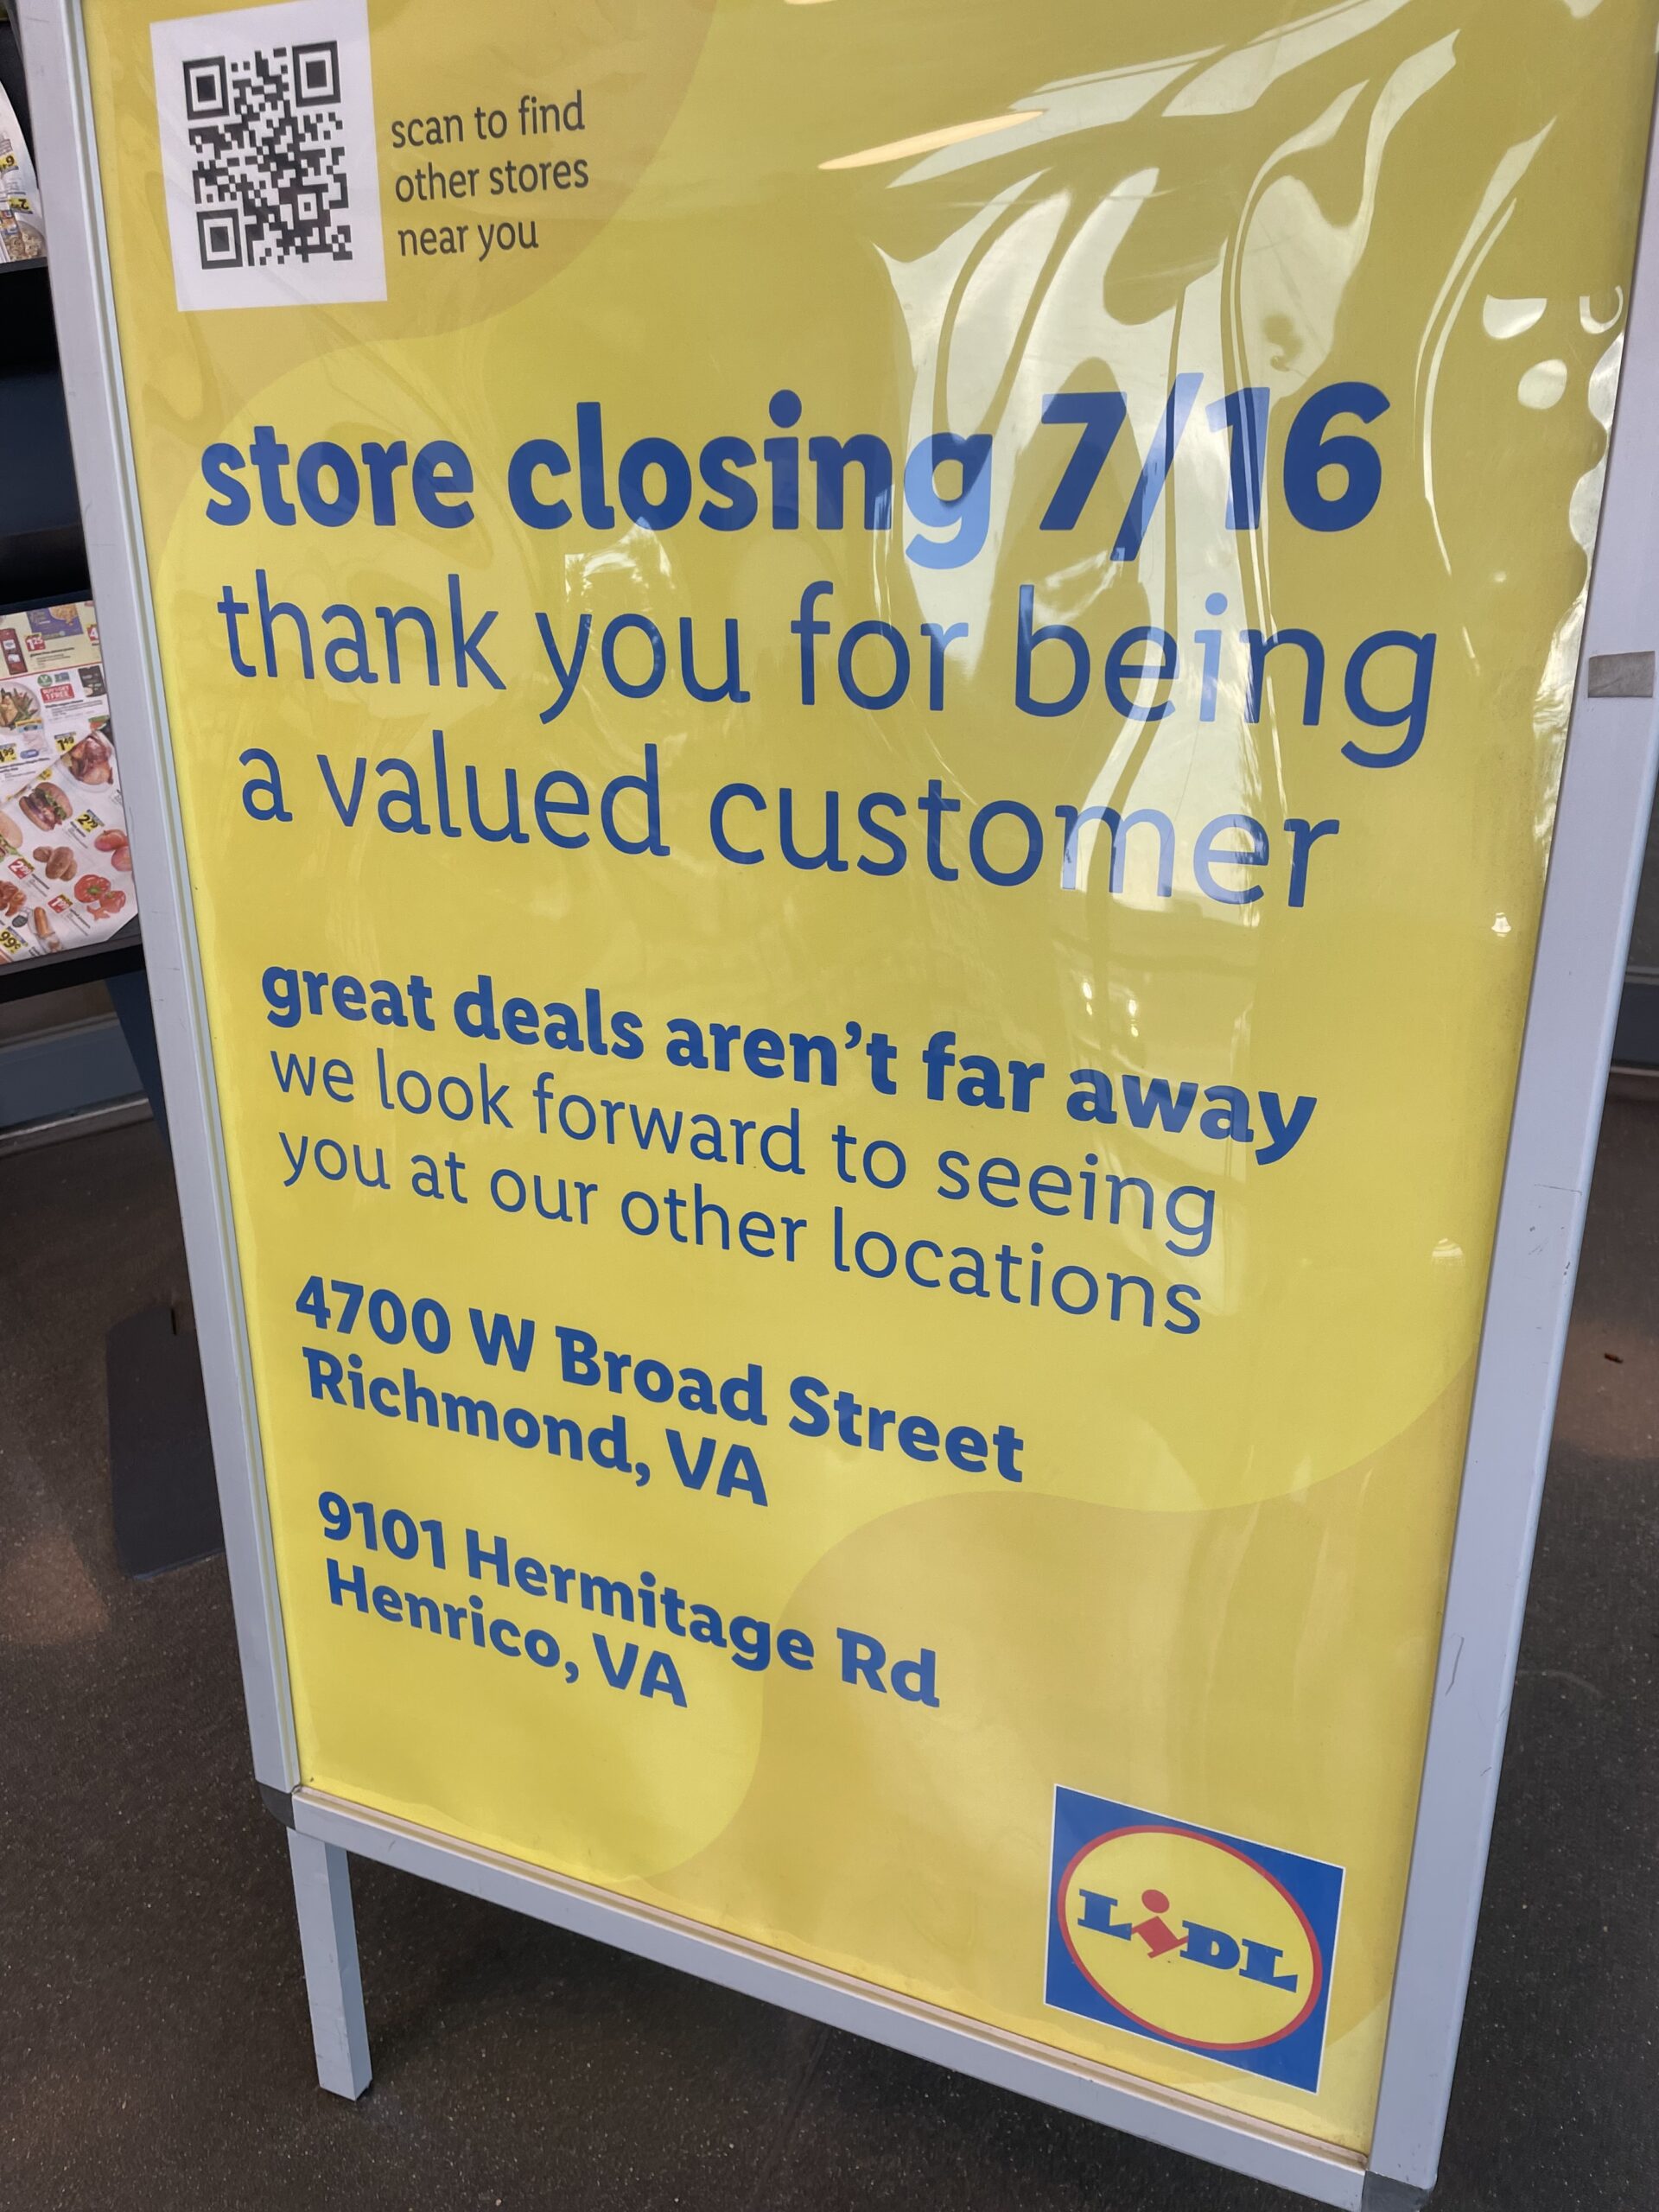 Grocery chain Lidl to close Short Pump store - Richmond BizSense